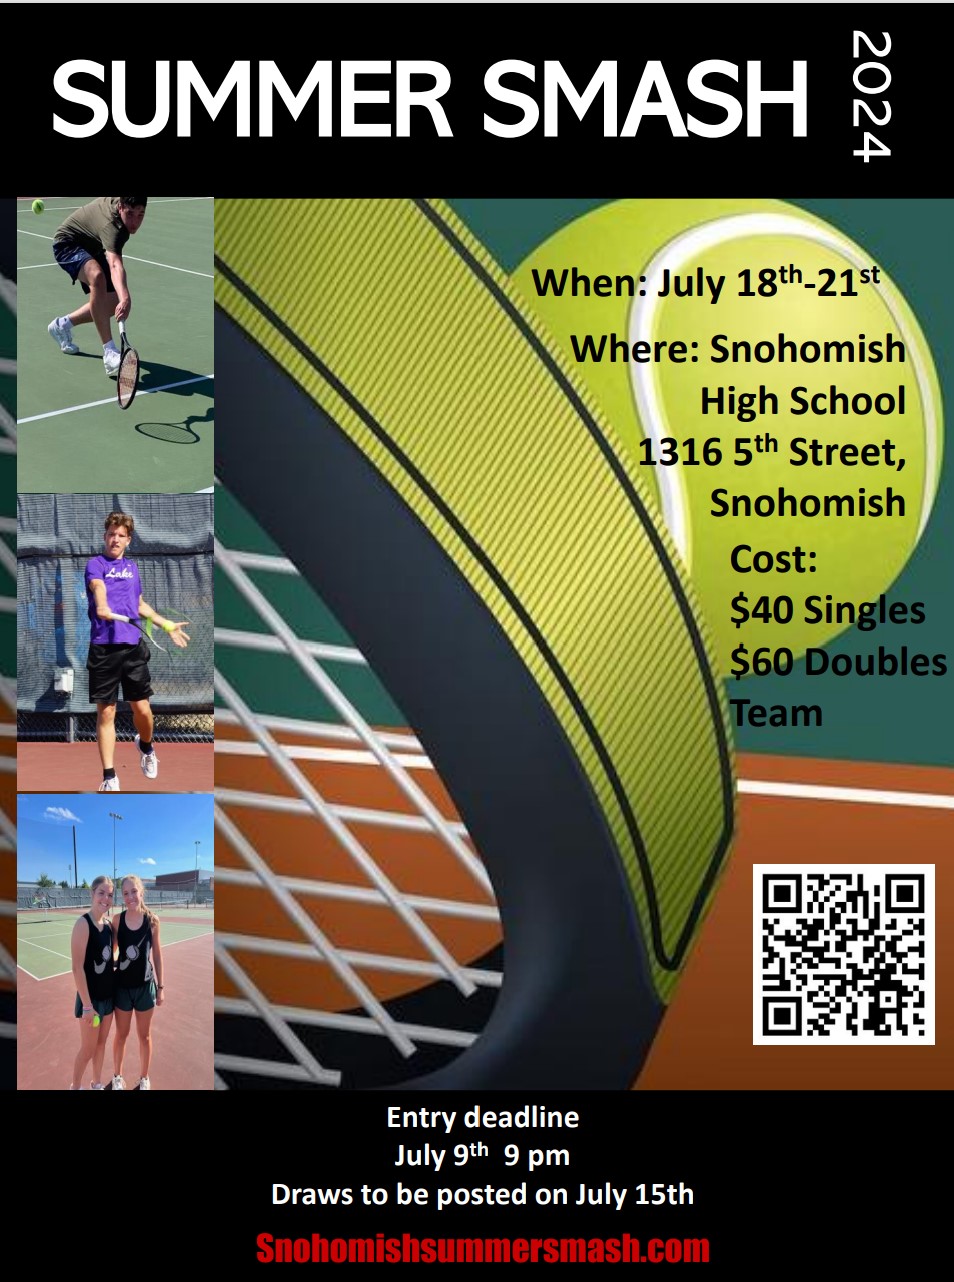 9th Annual Summer Smash returns July 18th! Snohomish Summer Smash